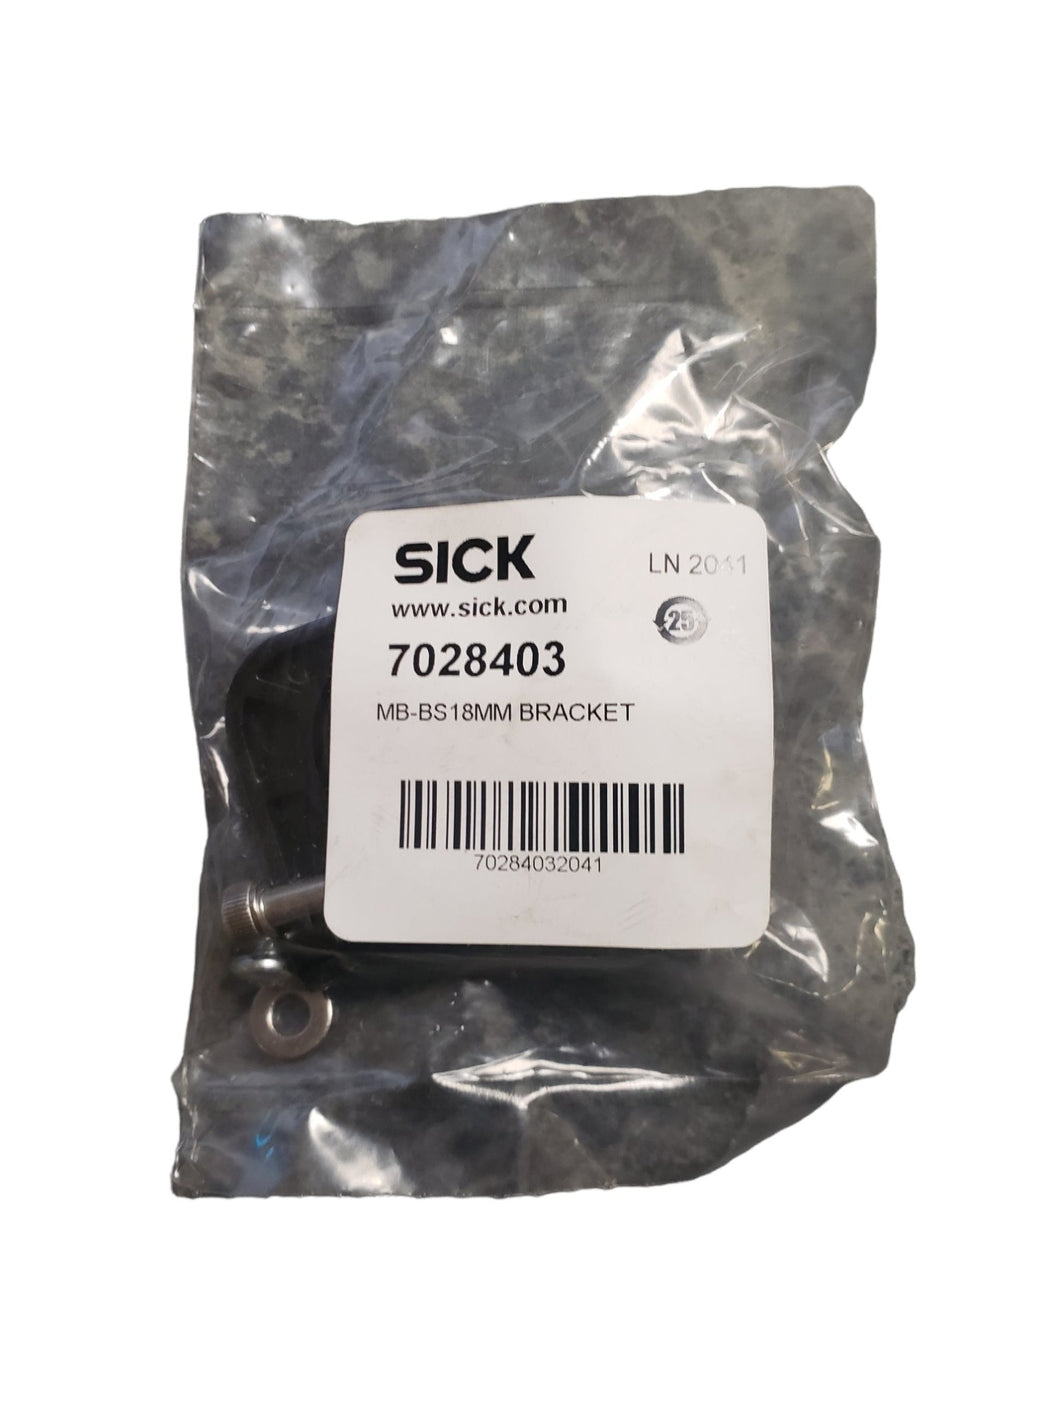 SICK OPTIC BRACKET PE BALL/CLAMP 7028403 - NEW IN PACKAGING - FreemanLiquidators - [product_description]